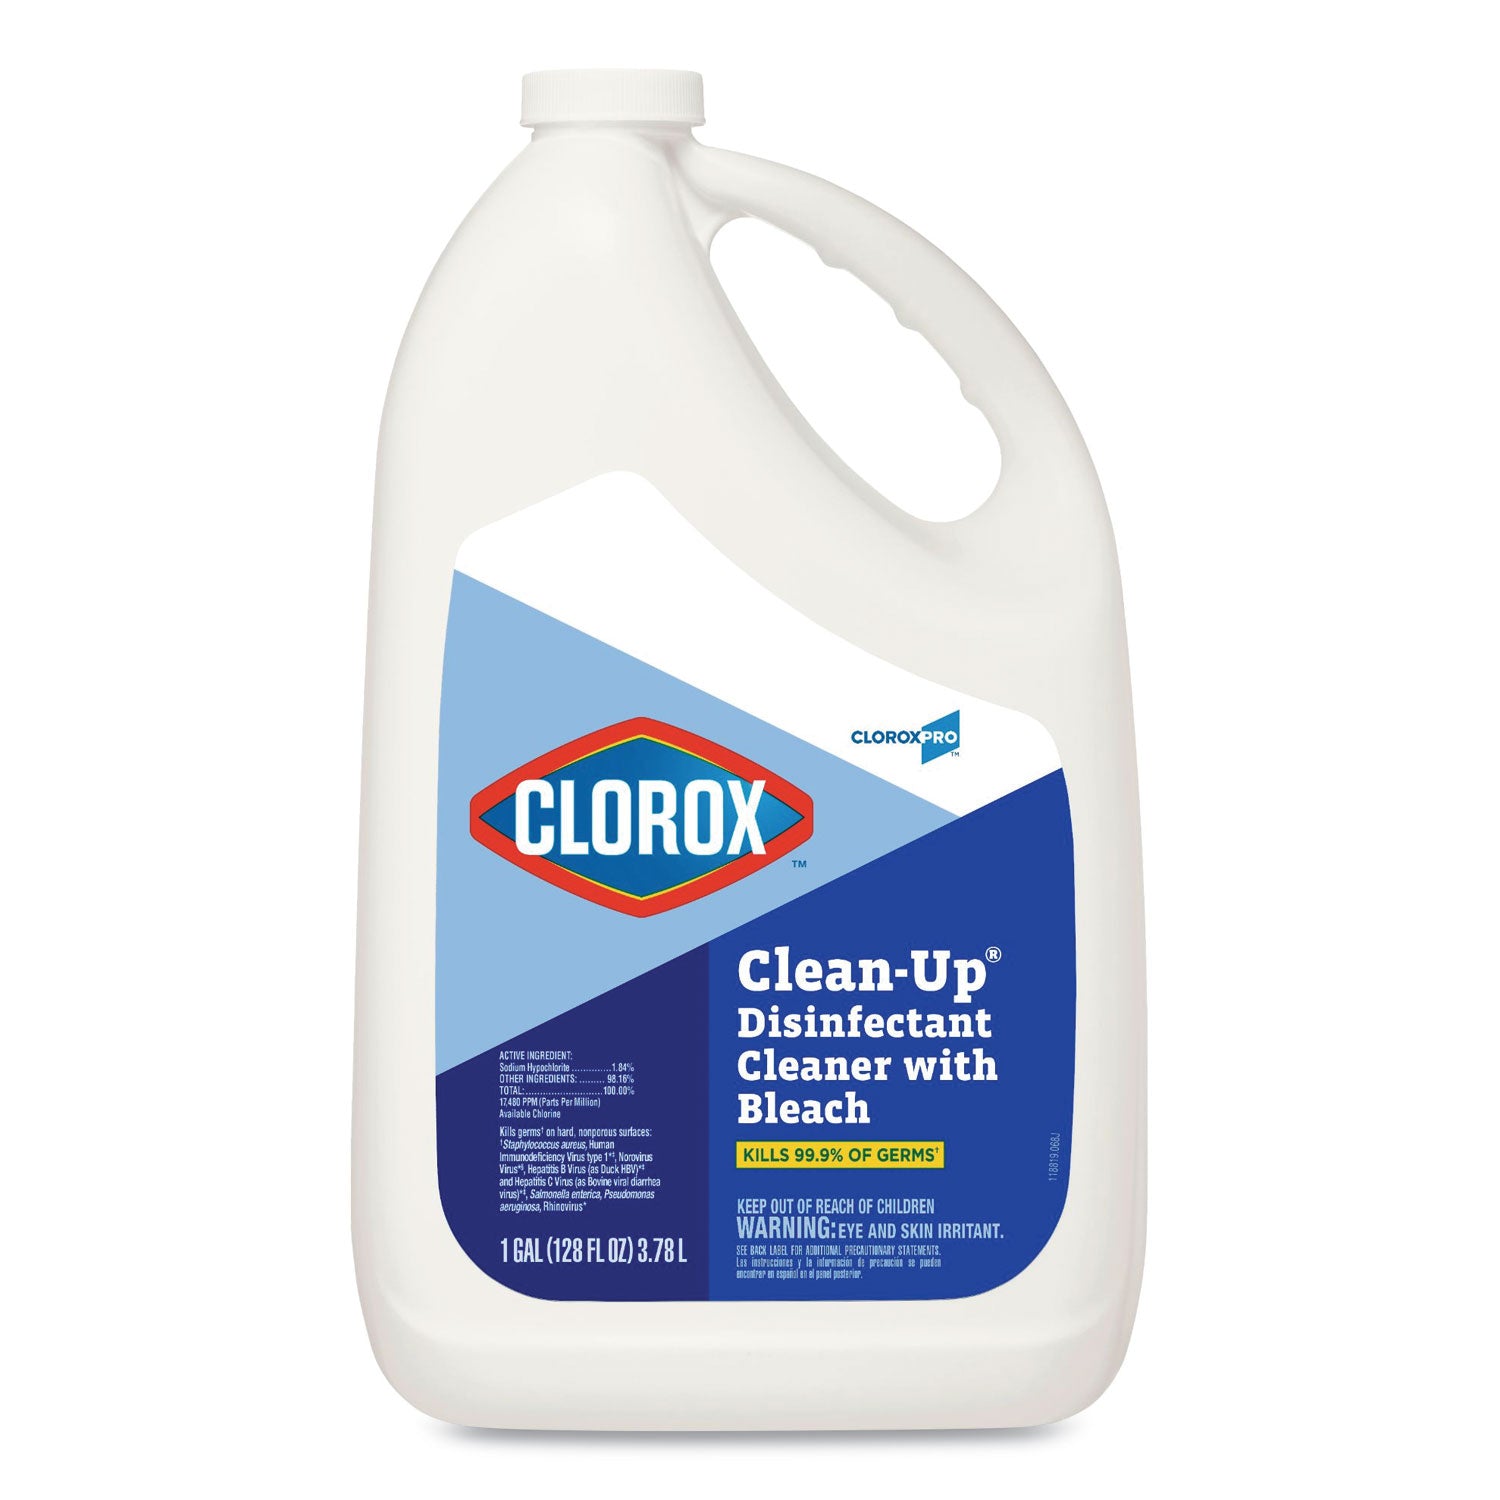 Clorox Pro Clorox Clean-up, Fresh Scent, 128 oz Refill Bottle - 